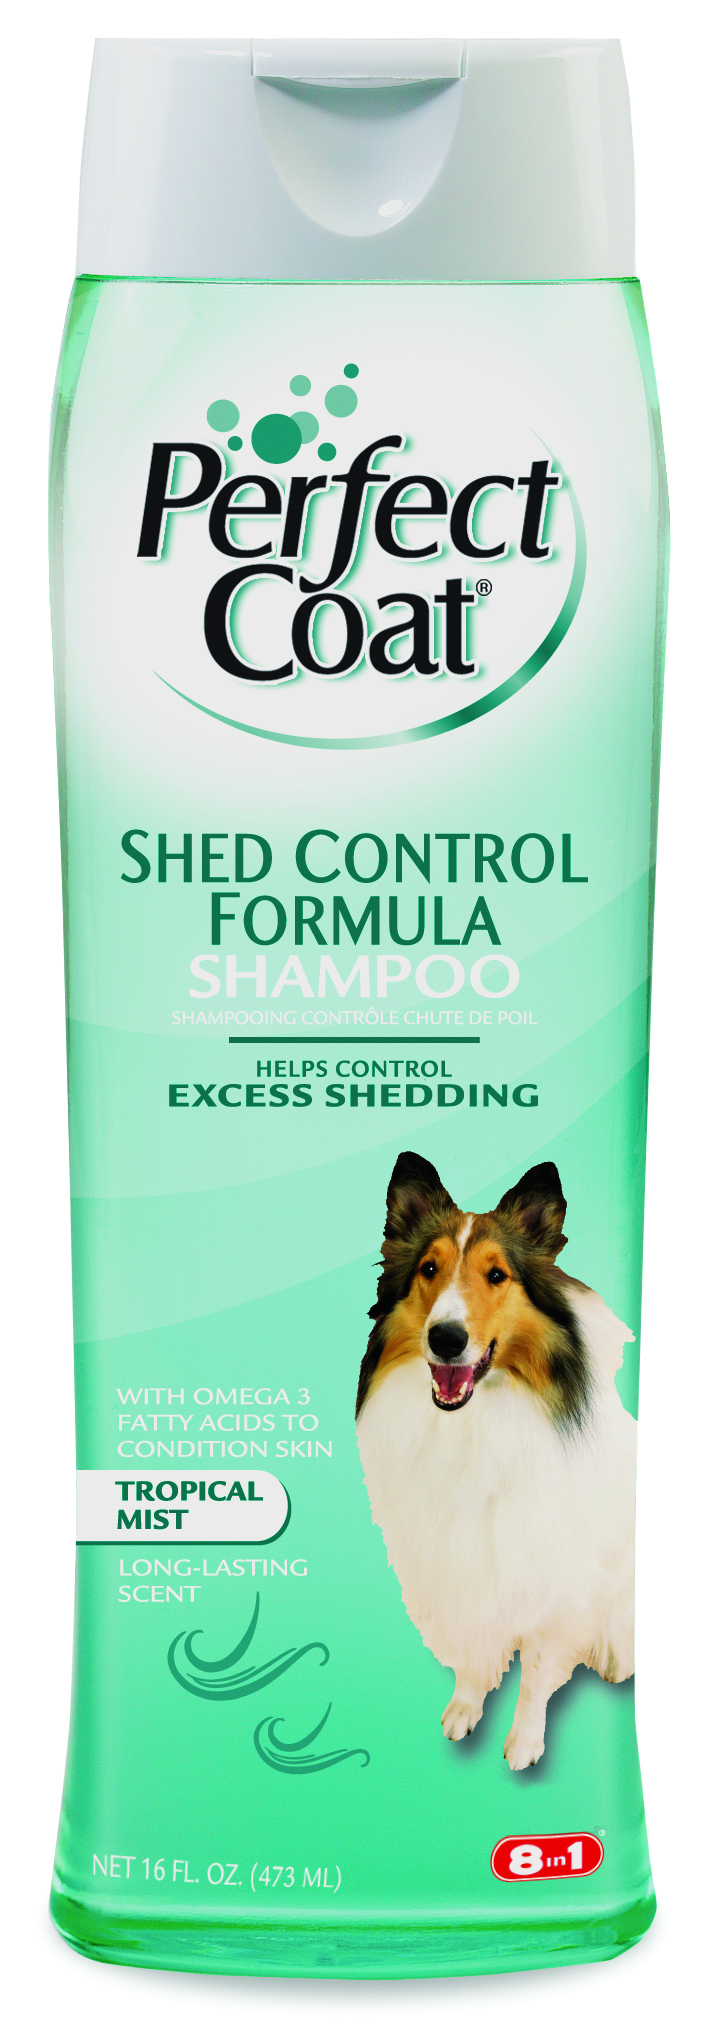 PERFECT COAT SHAMPOO - SHED CONTROL FORMULA